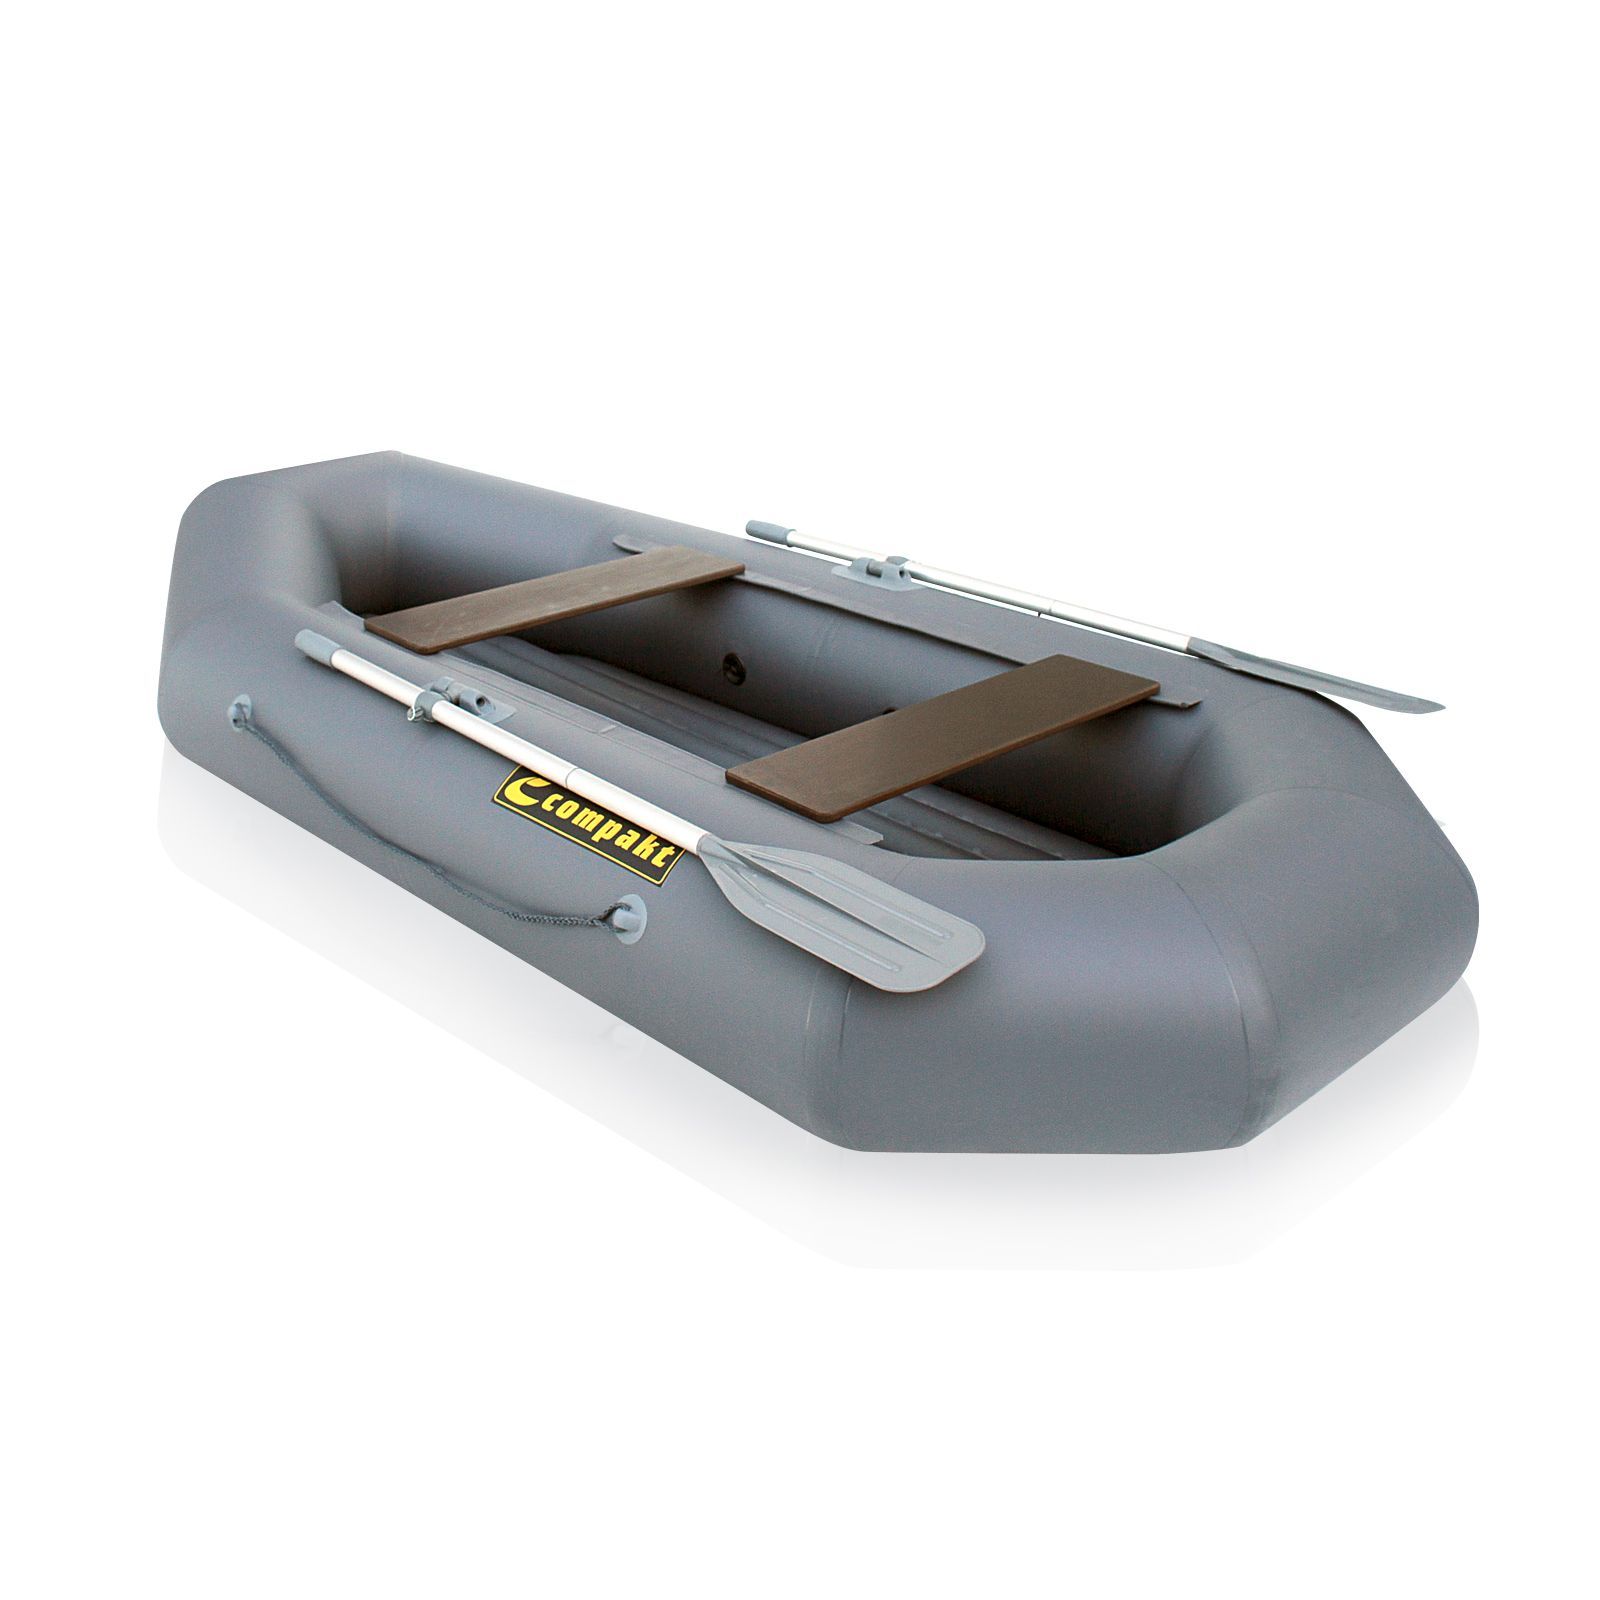 Лодка ПВХ Компакт-260N- НД надувное дно серый цвет упаковка-мешок оксфорд